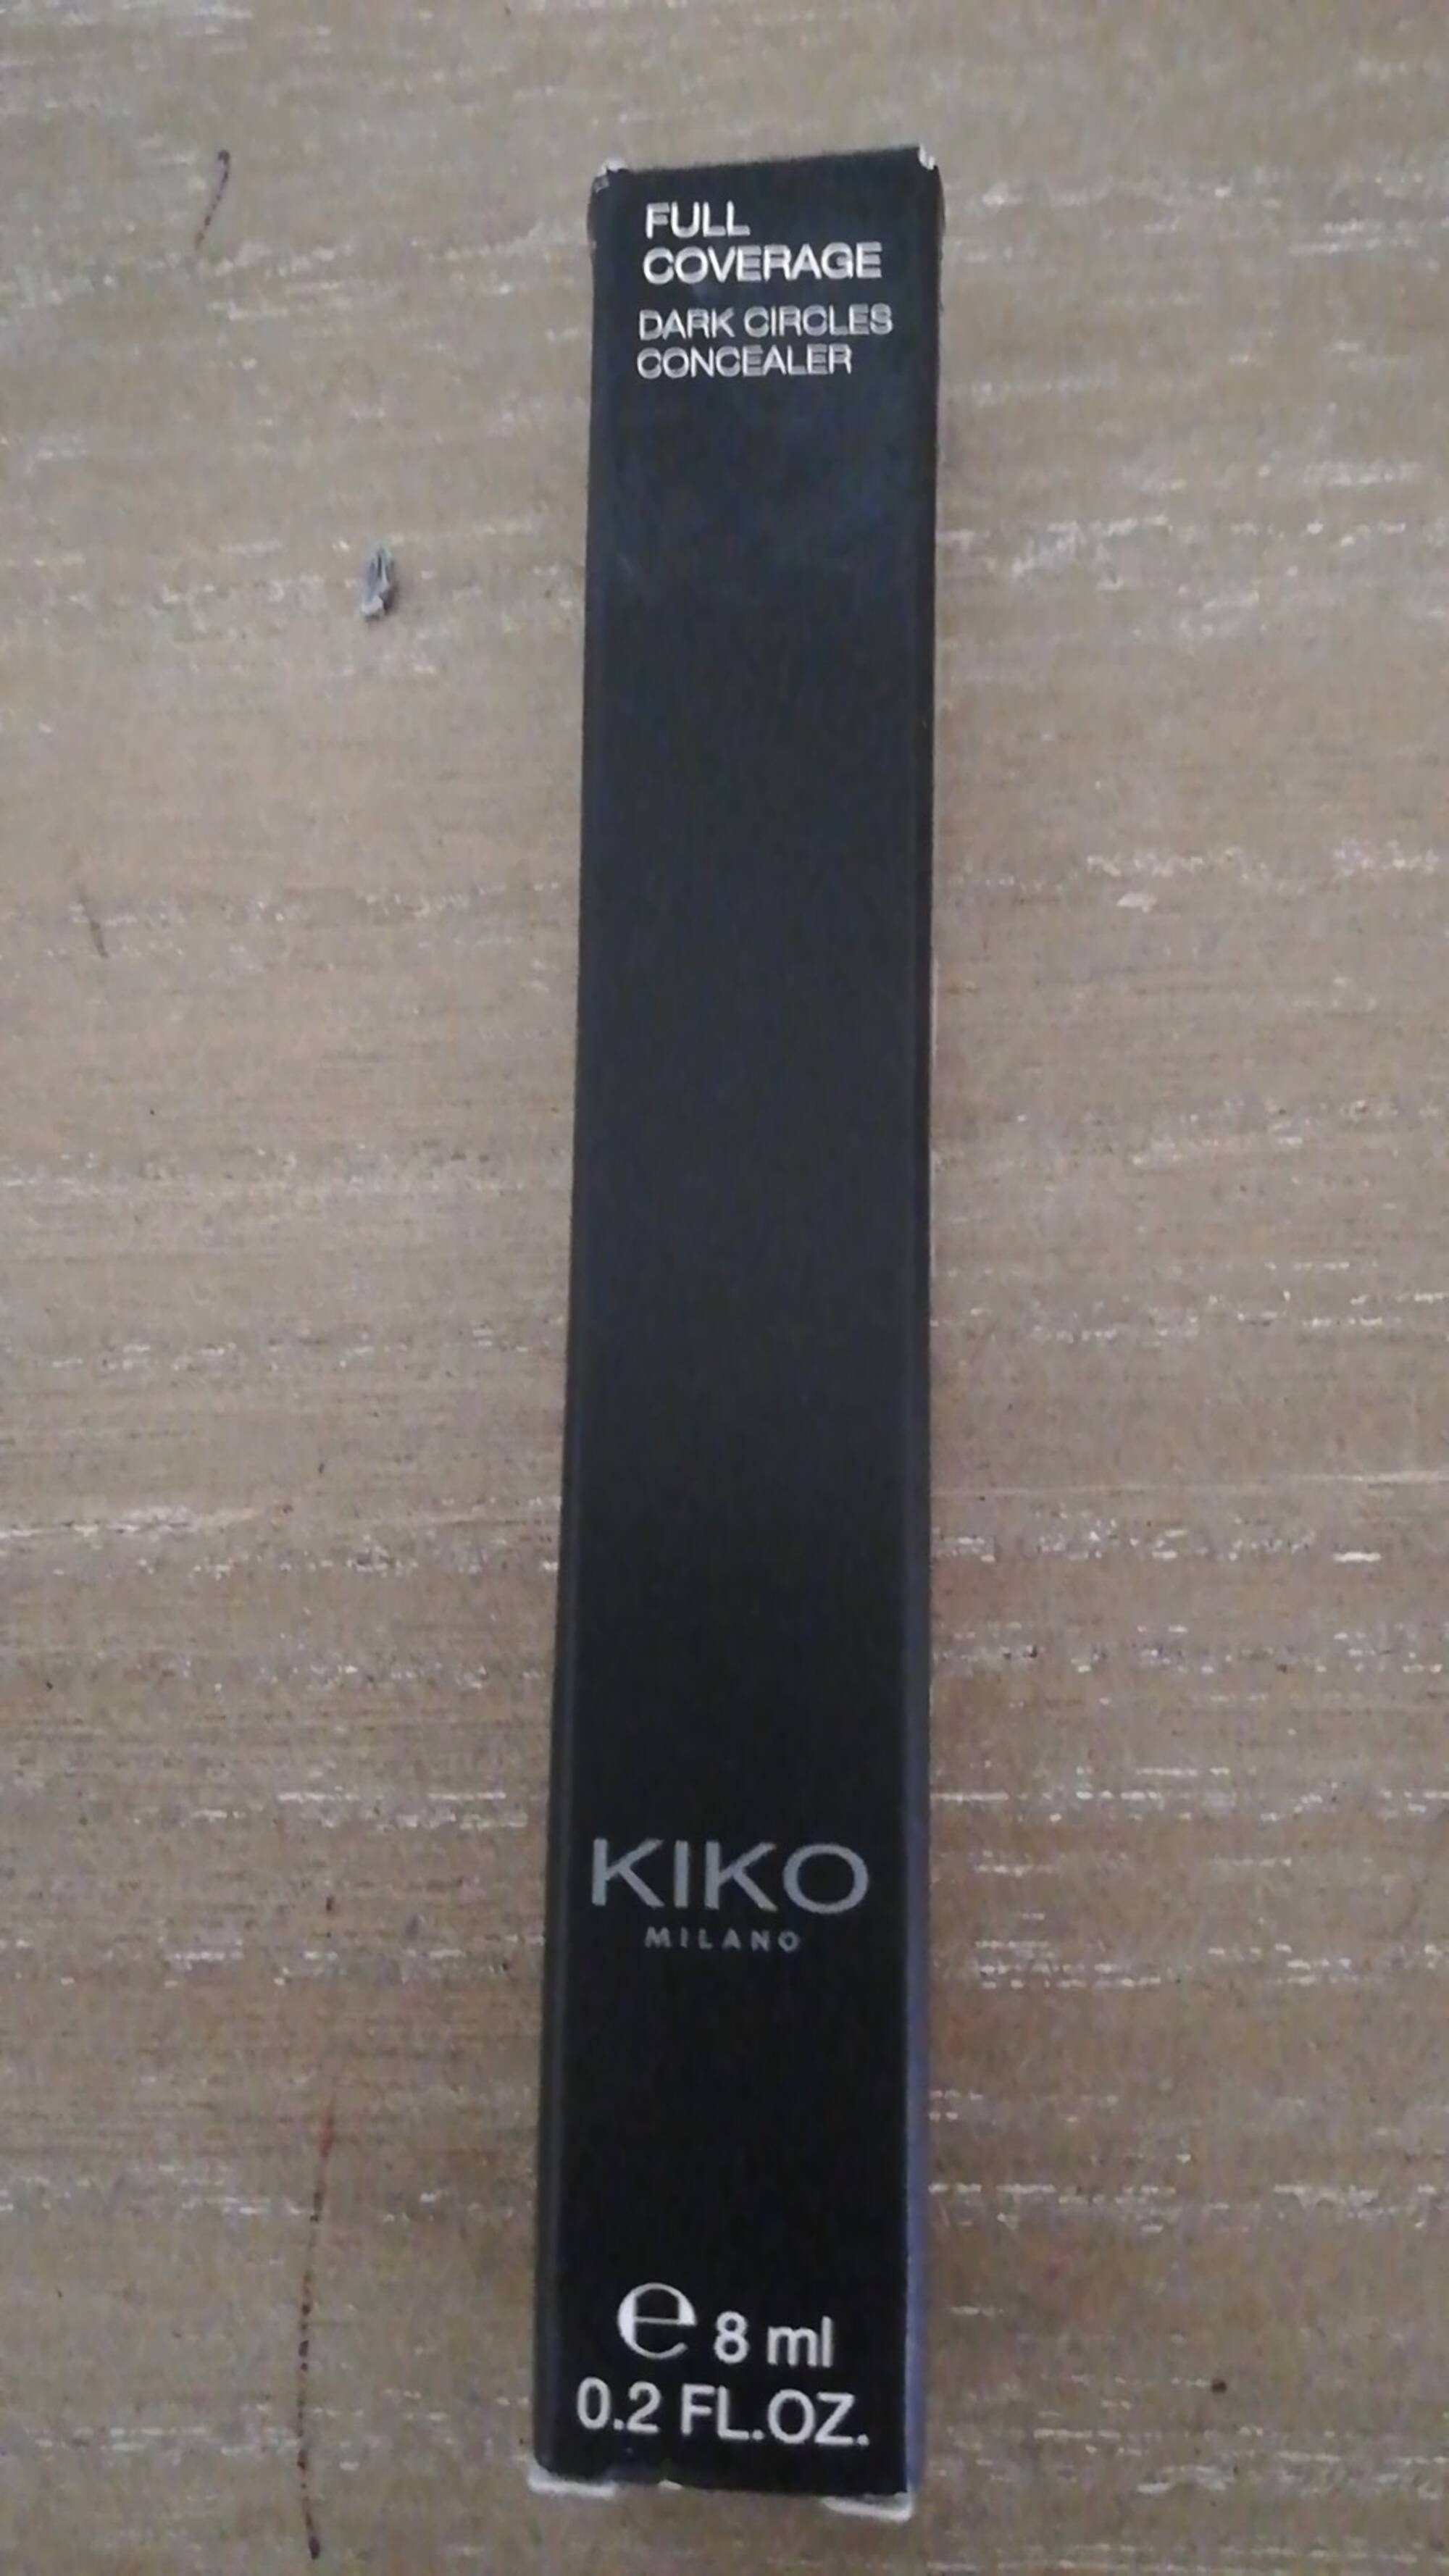 KIKO MILANO - Full coverage - Dark circles concealer